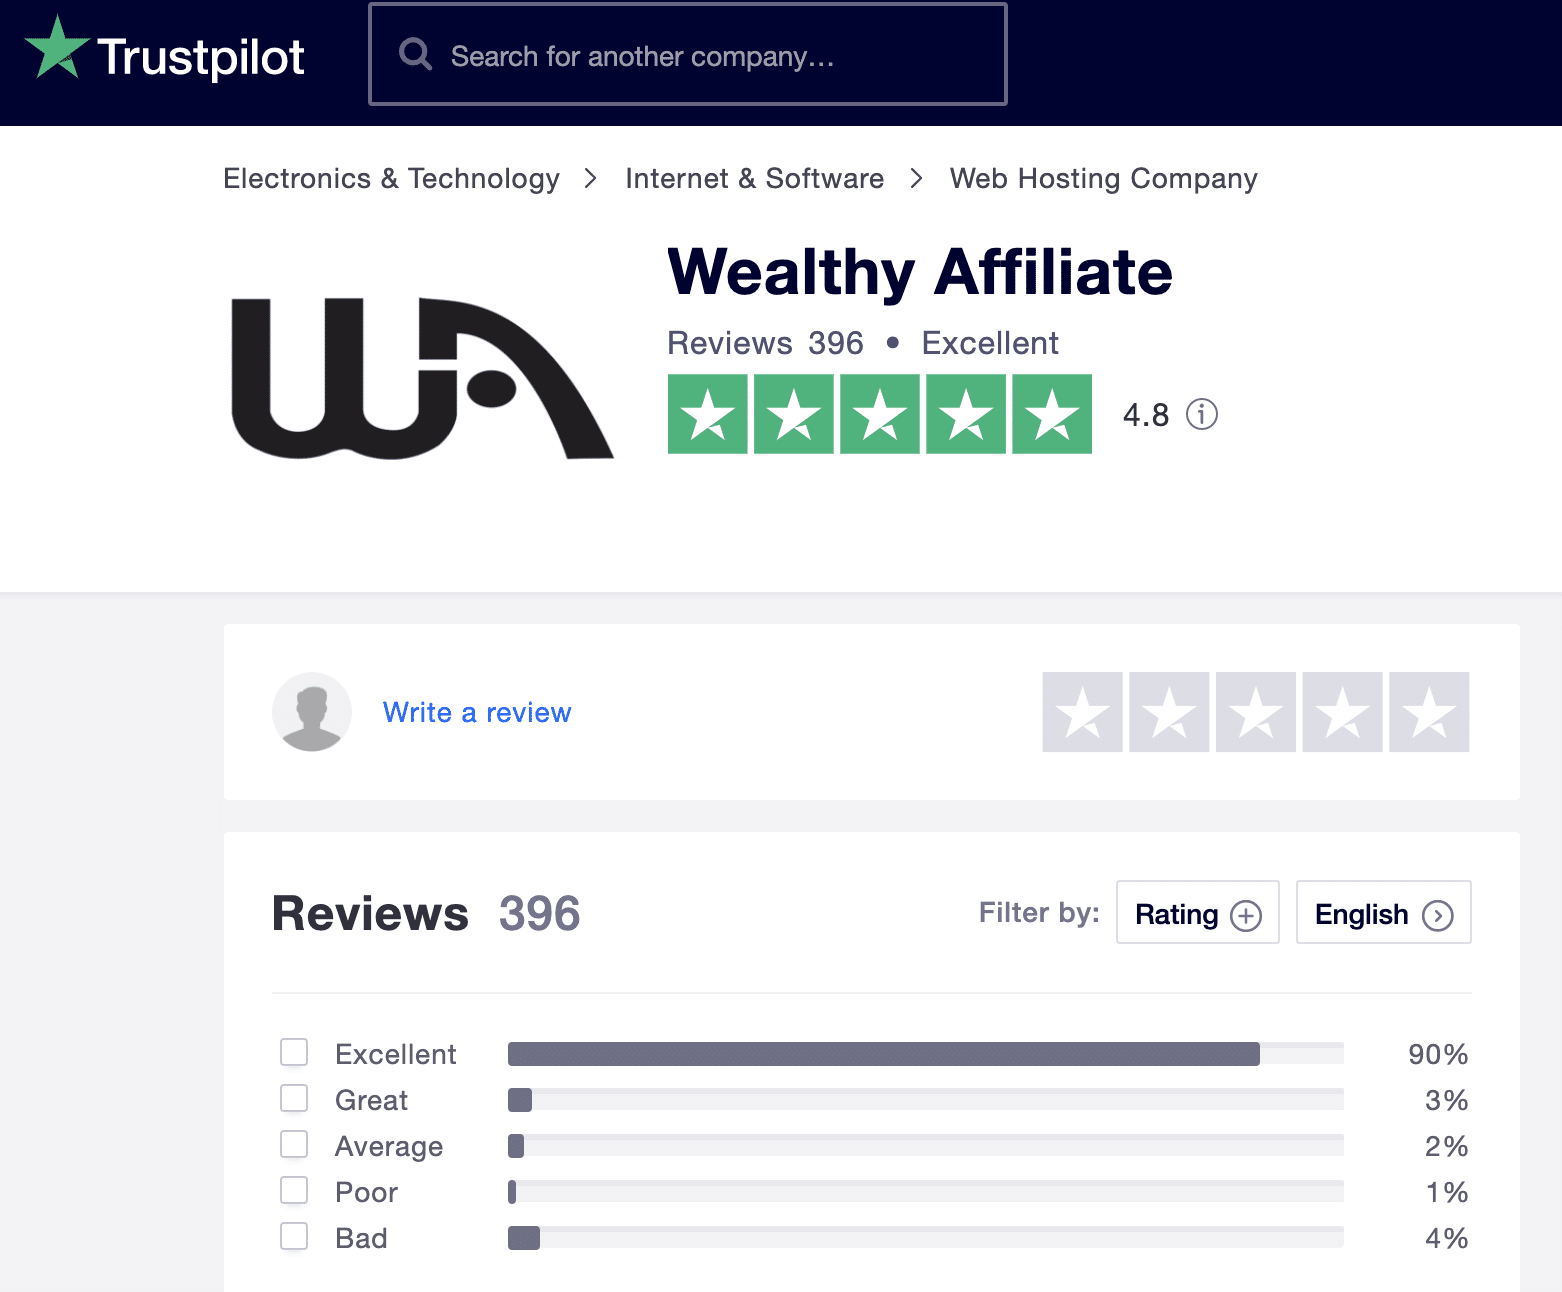 Wealthy Affiliate rating on Trustpilot